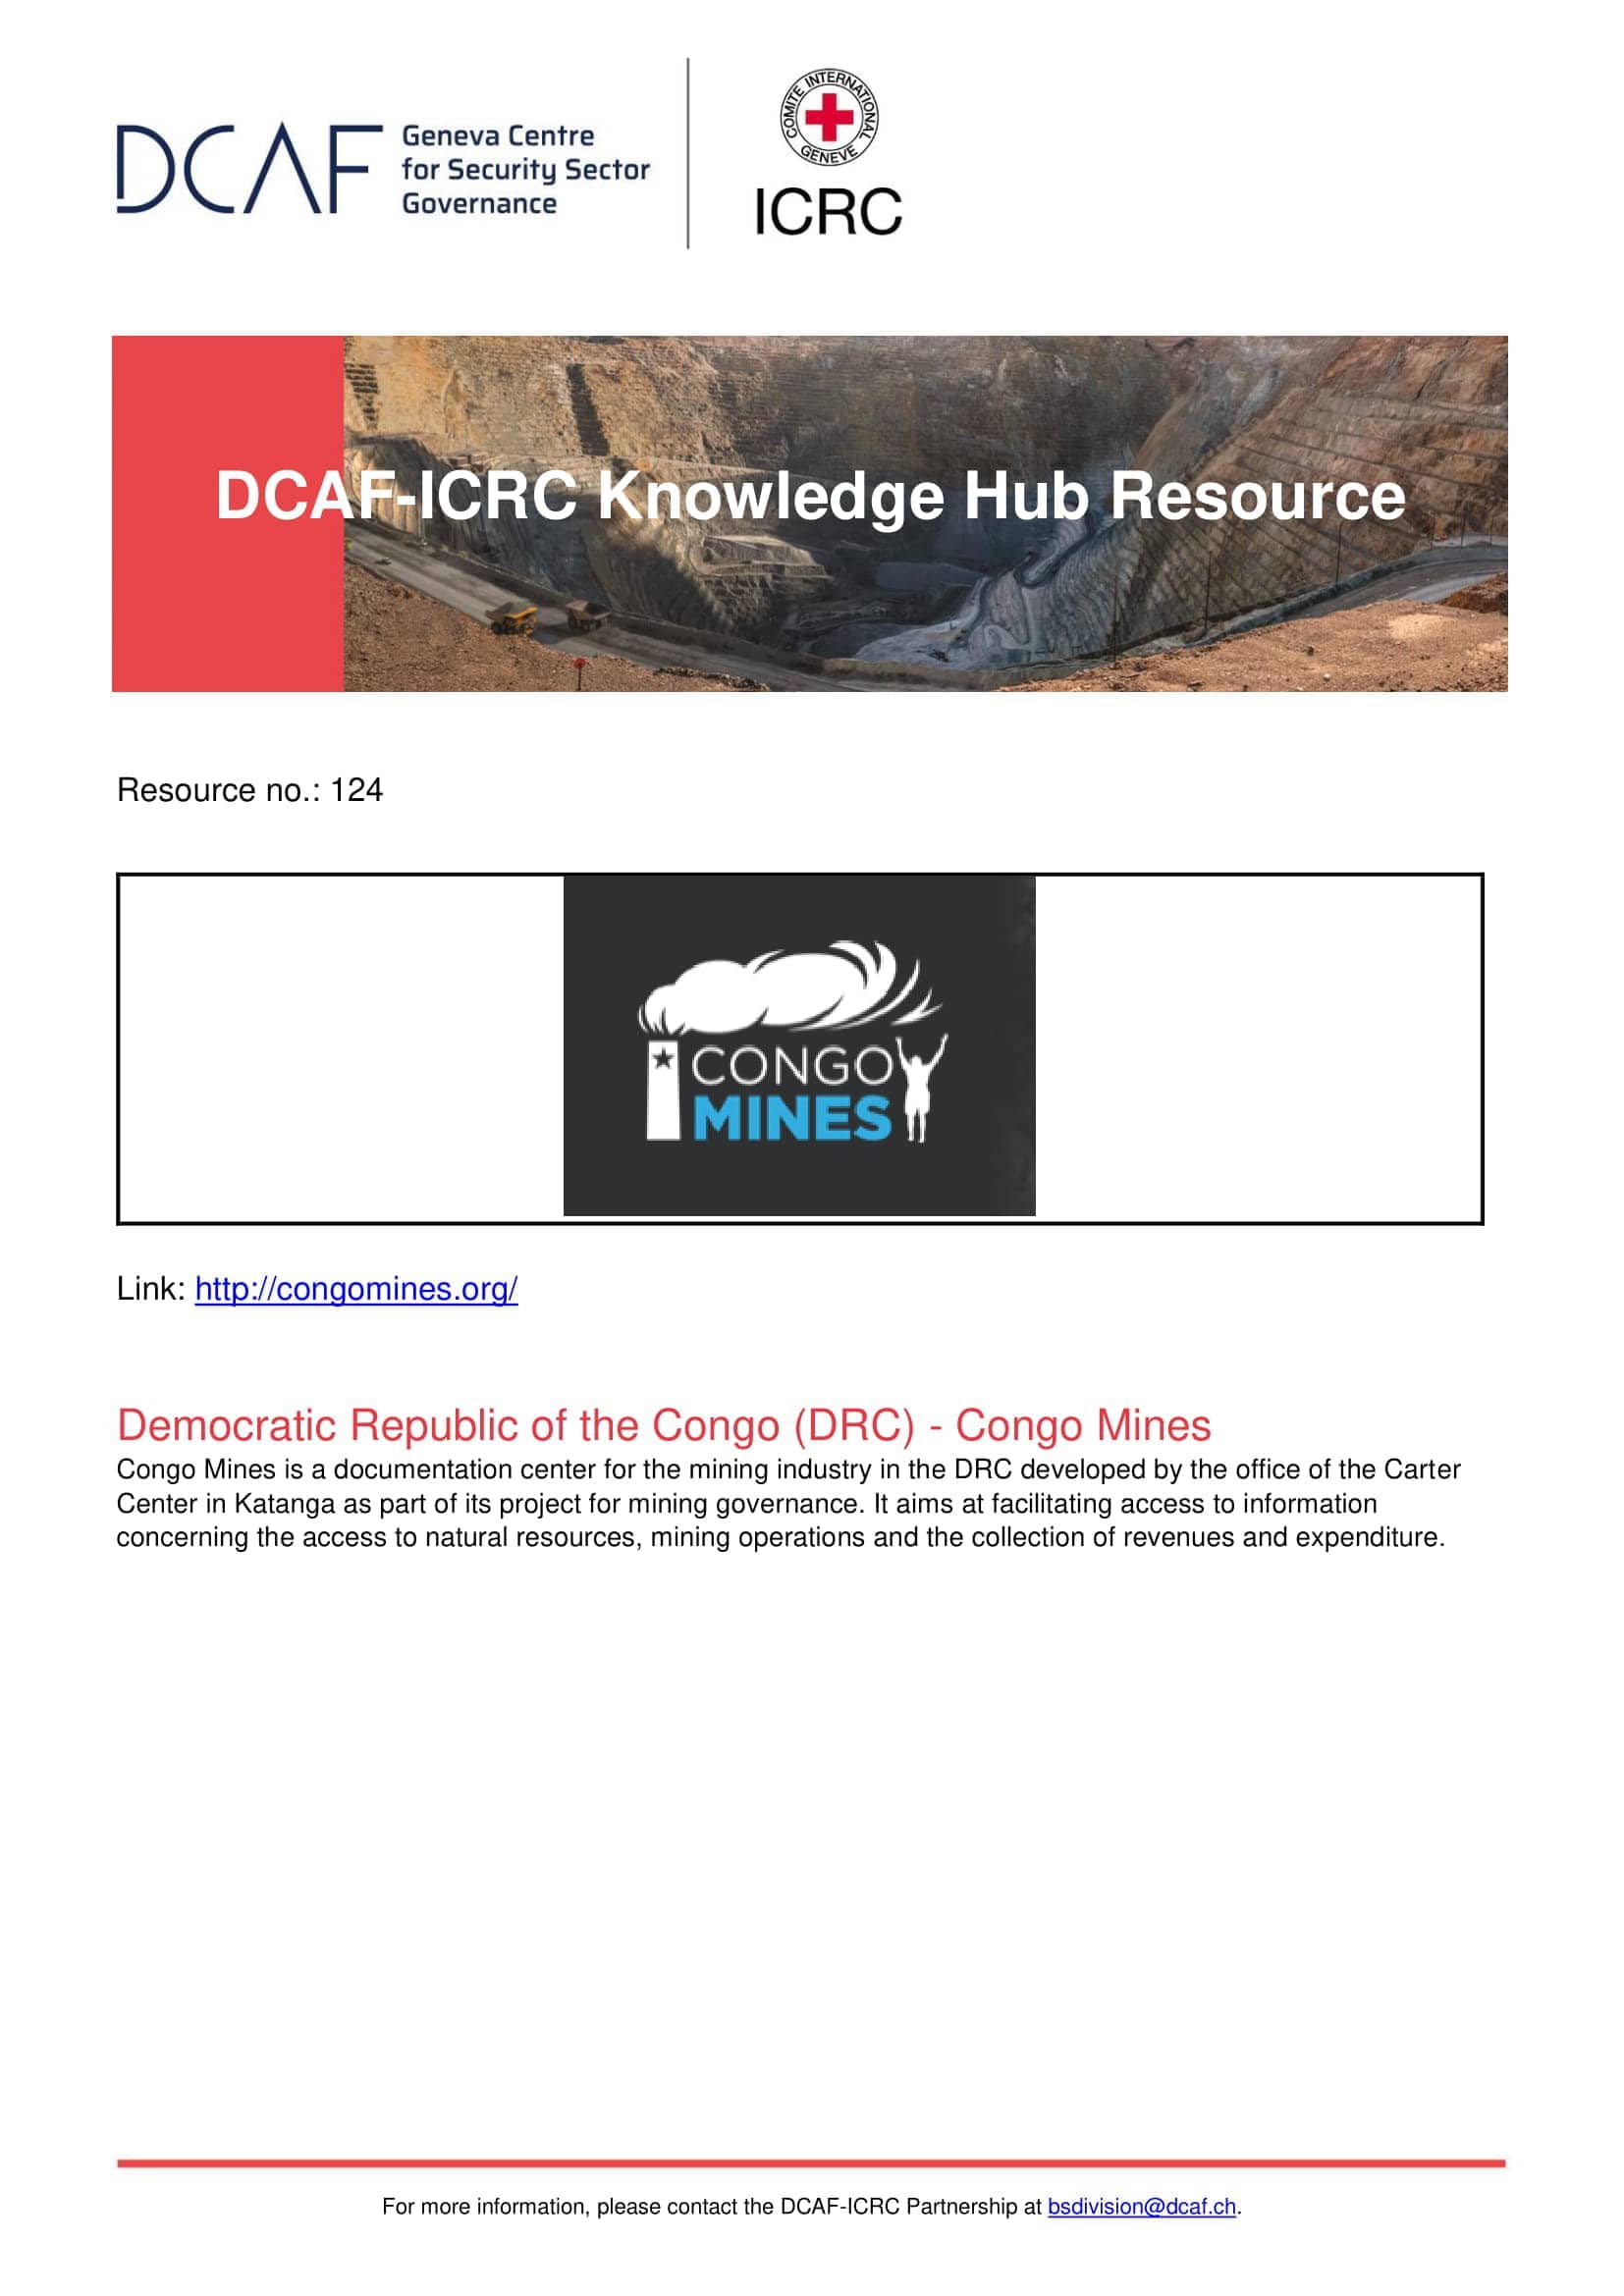 Democratic Republic of the Congo (DRC) - Congo Mines